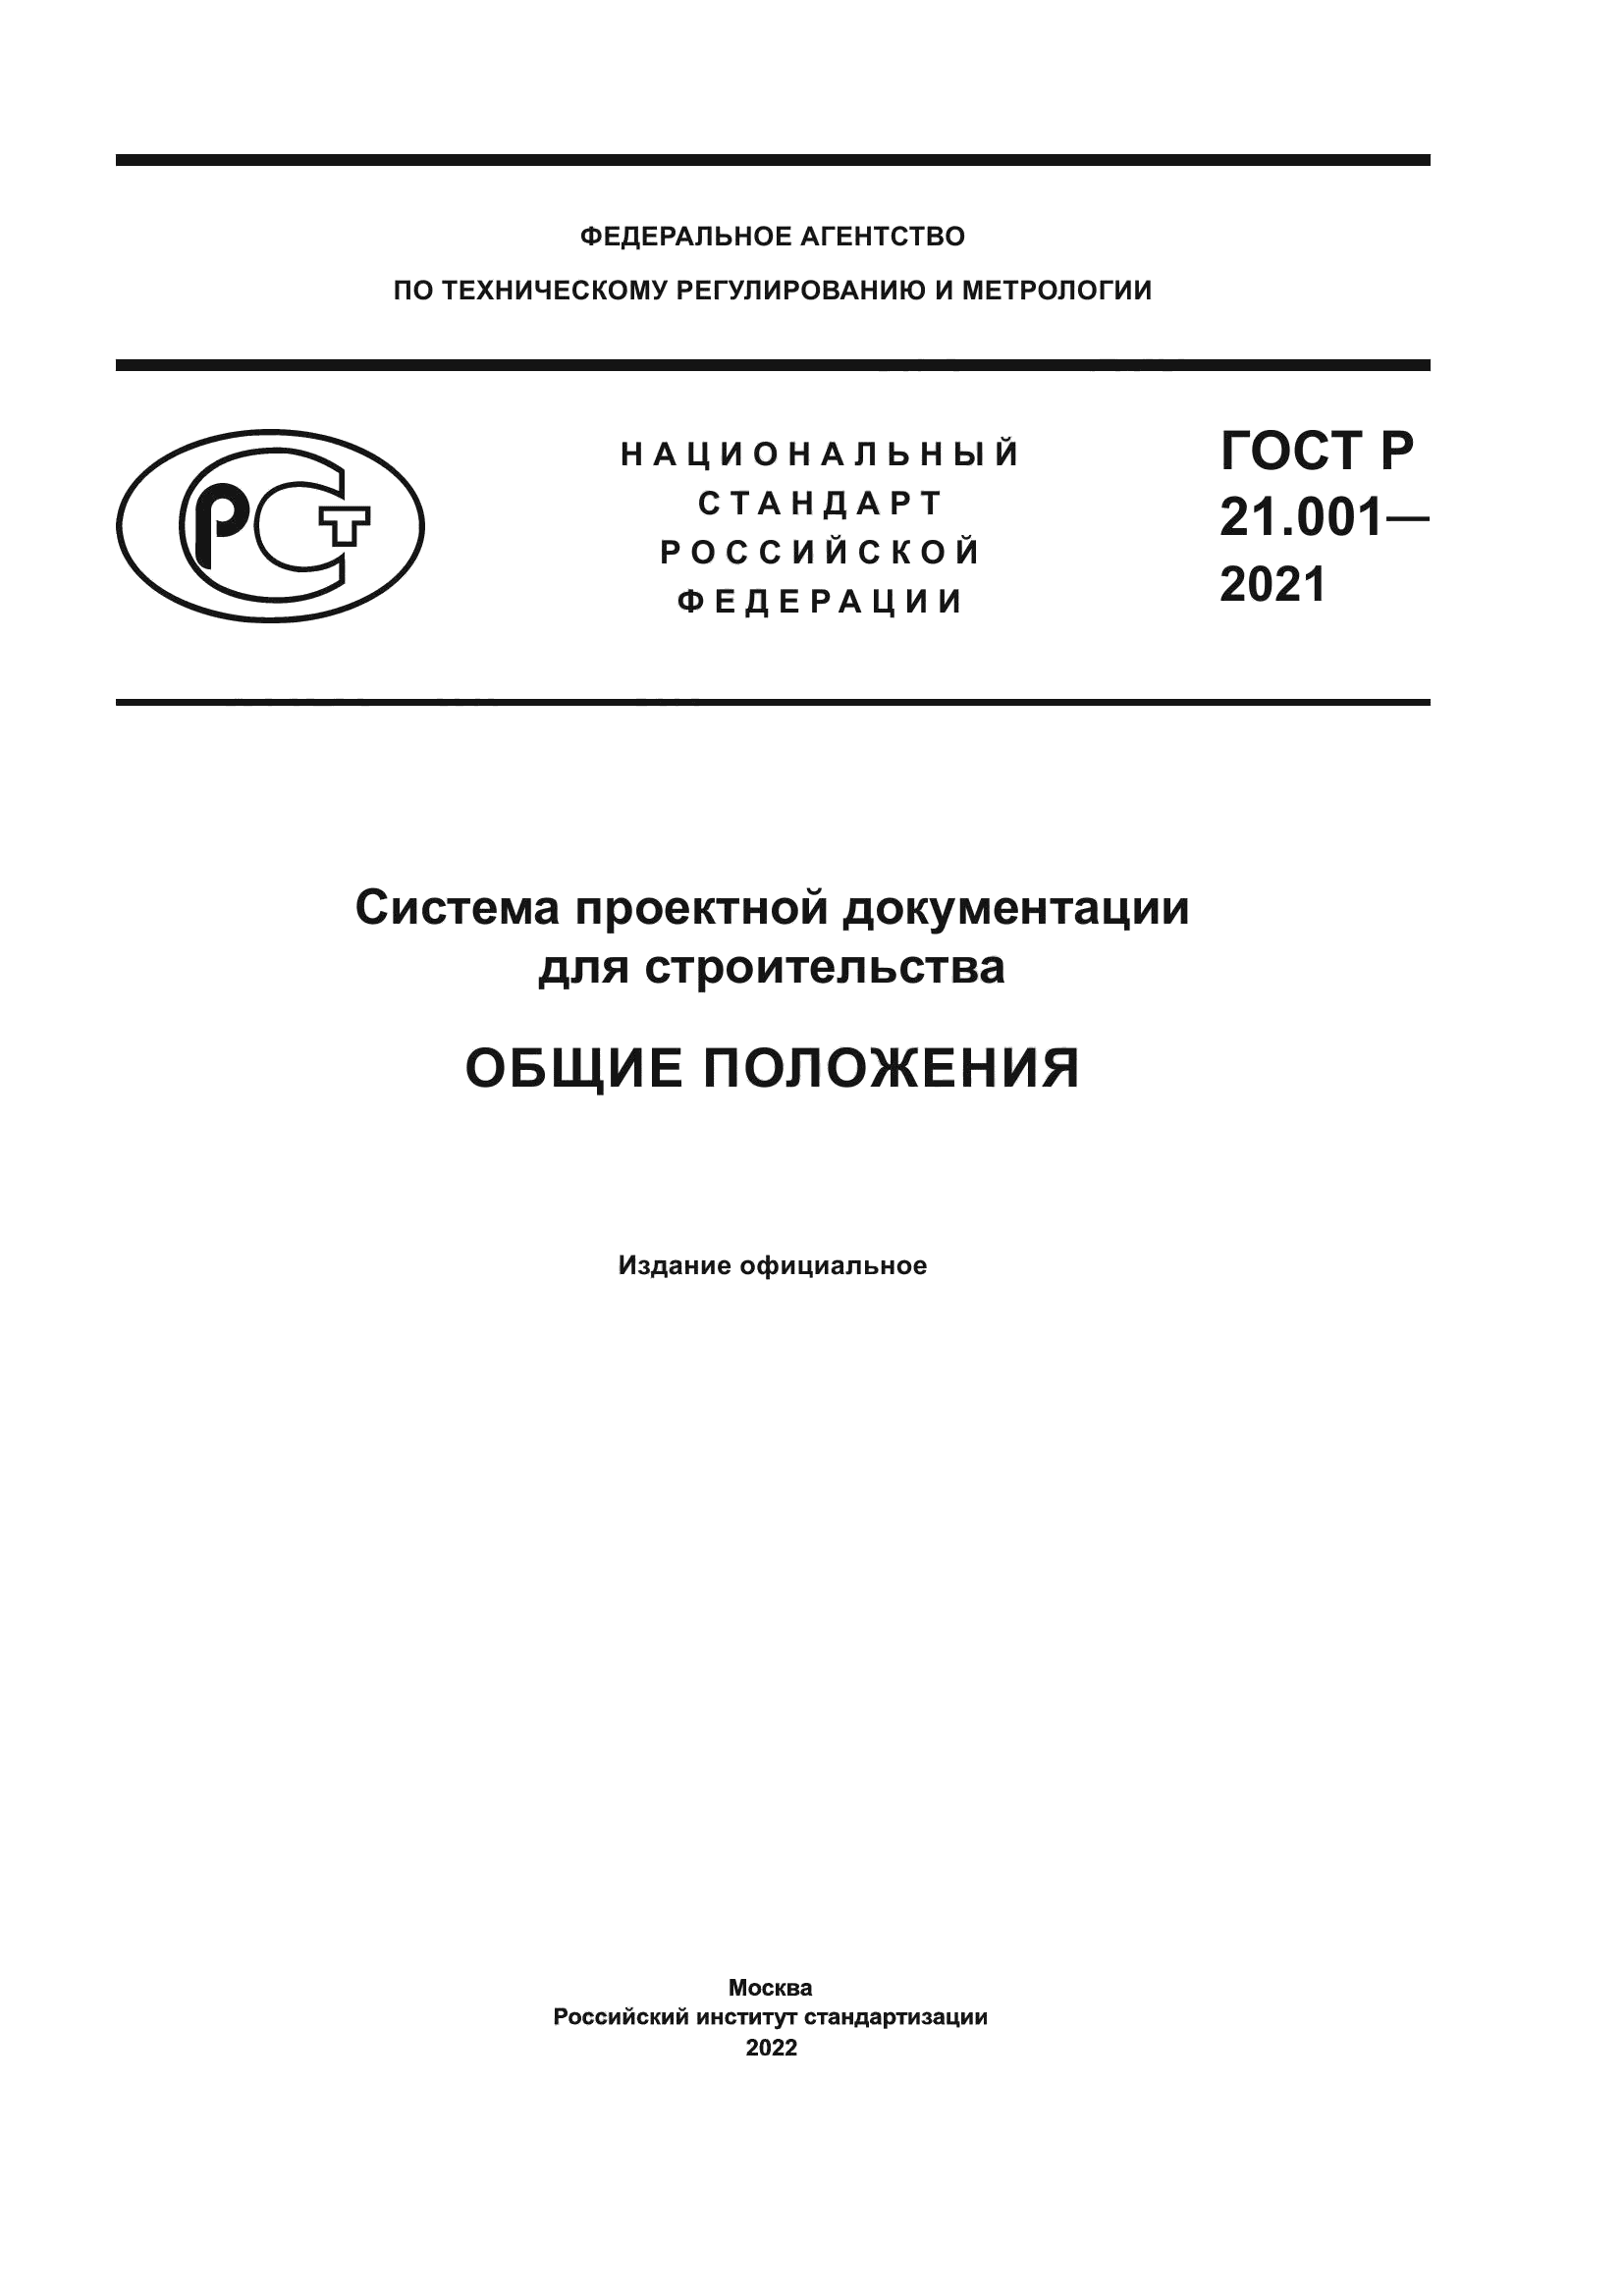 ГОСТ Р 21.001-2021